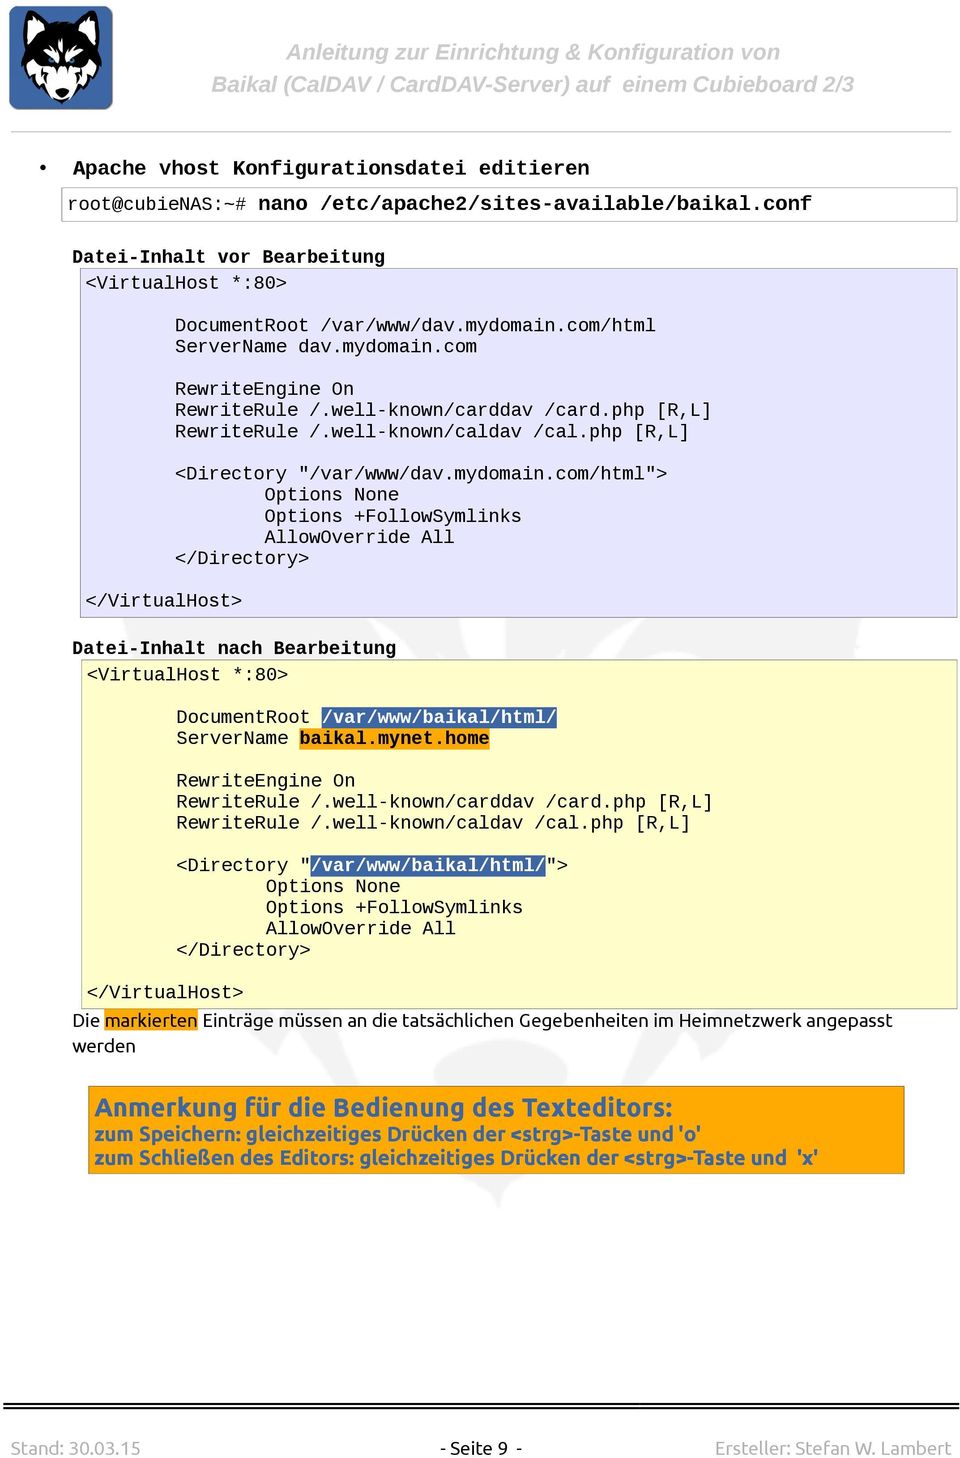 com RewriteEngine On RewriteRule /.well-known/carddav /card.php [R,L] RewriteRule /.well-known/caldav /cal.php [R,L] <Directory "/var/www/dav.mydomain.